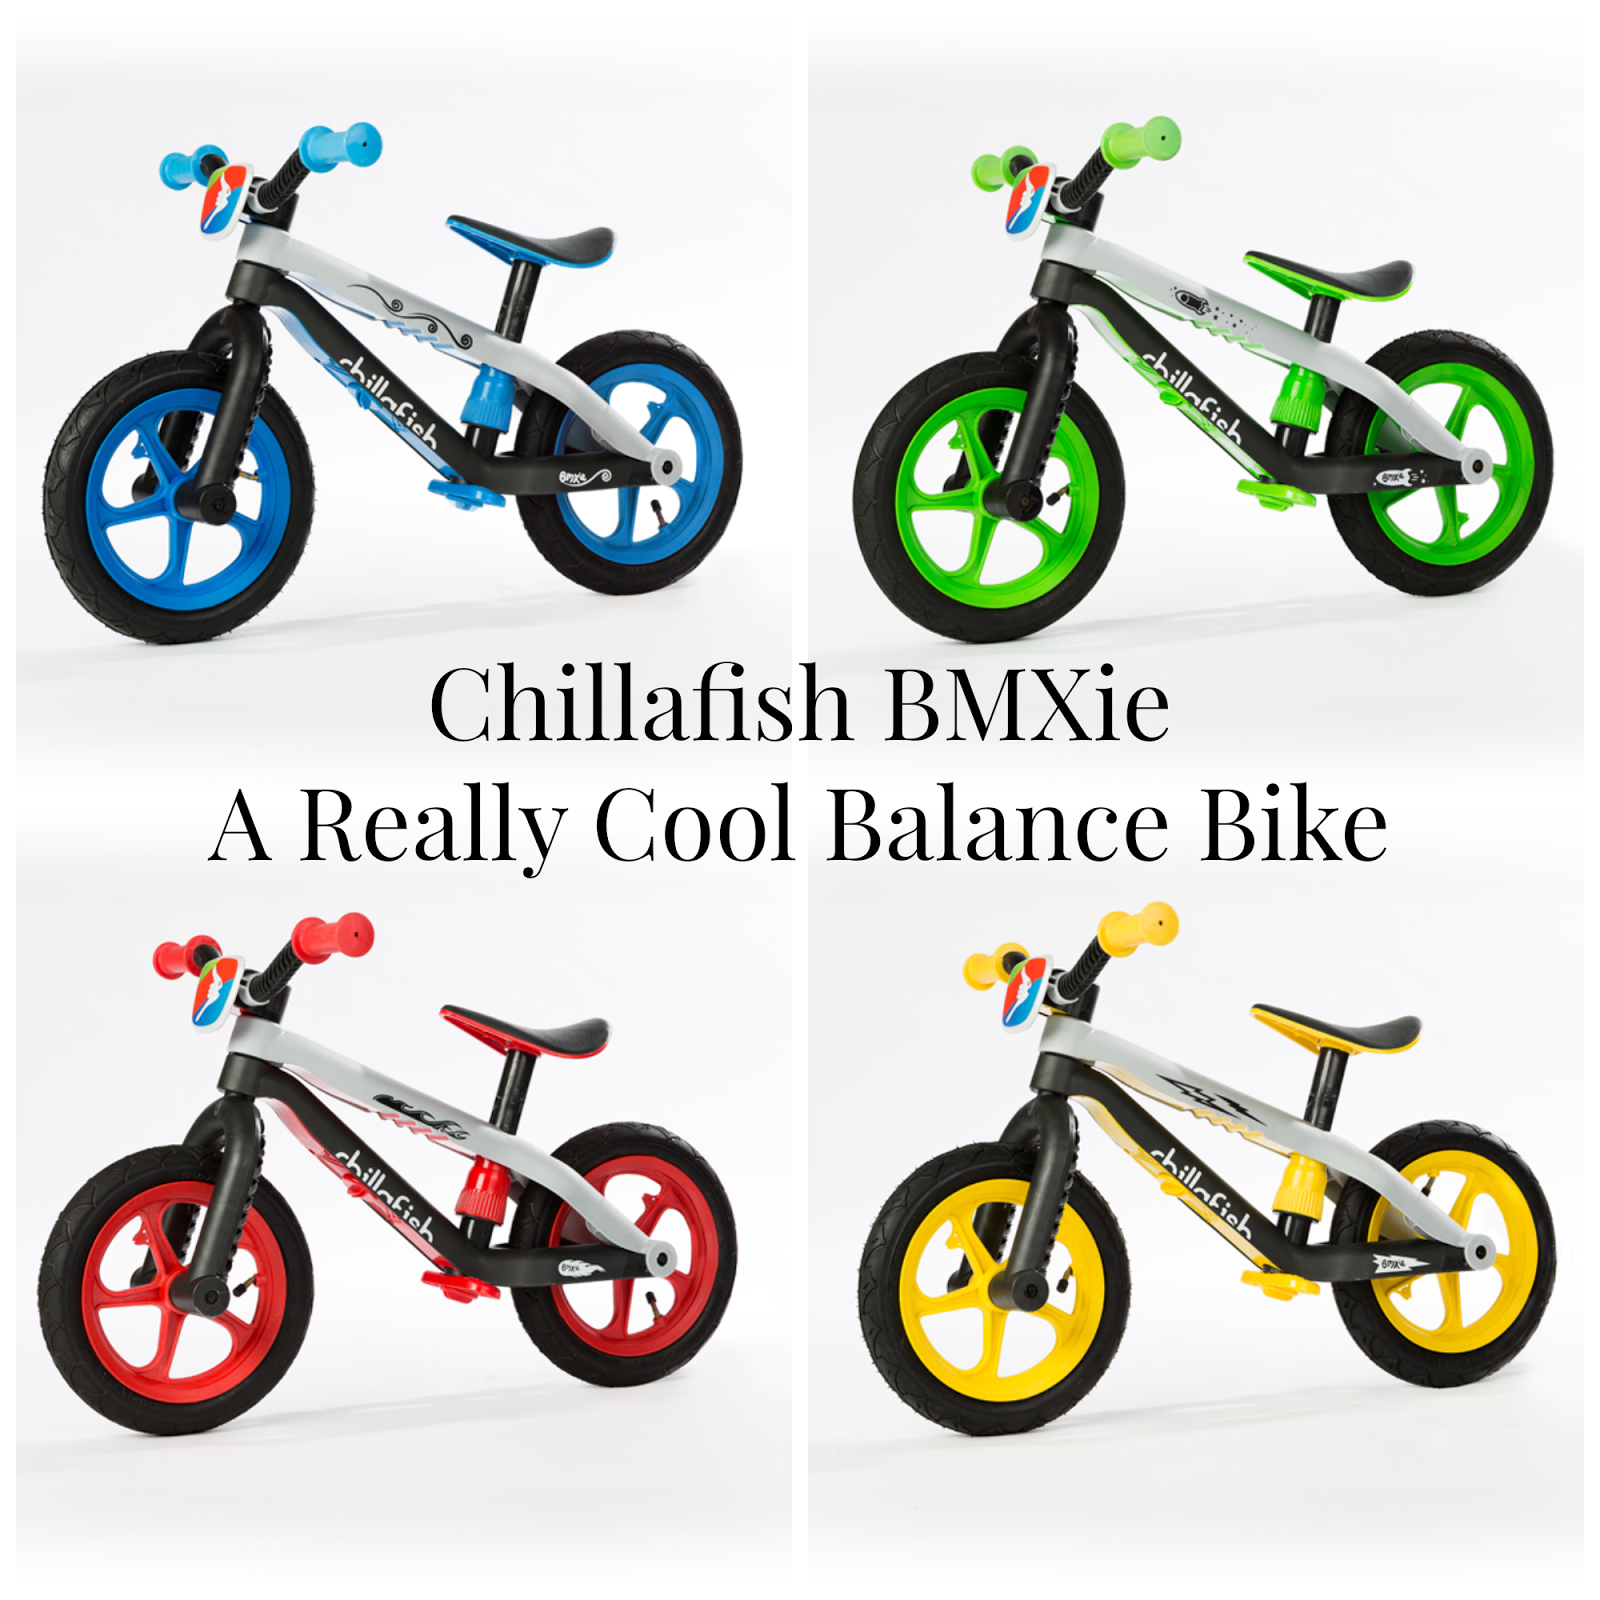 Chillafish BMXie – A Really Cool Balance Bike